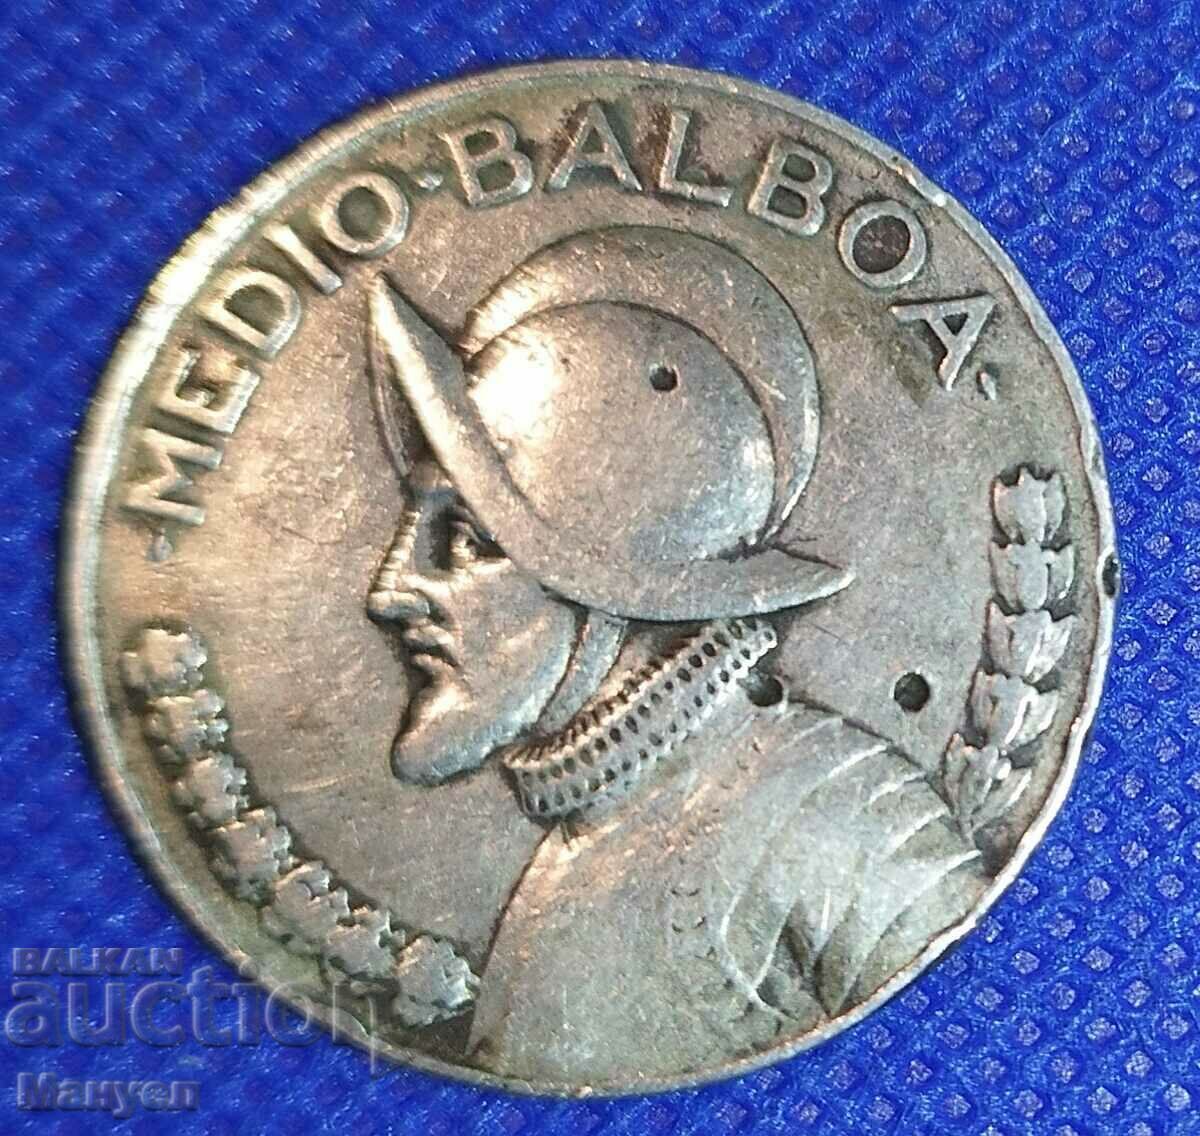 1/2 Balboa, Panama, silver, 1947.